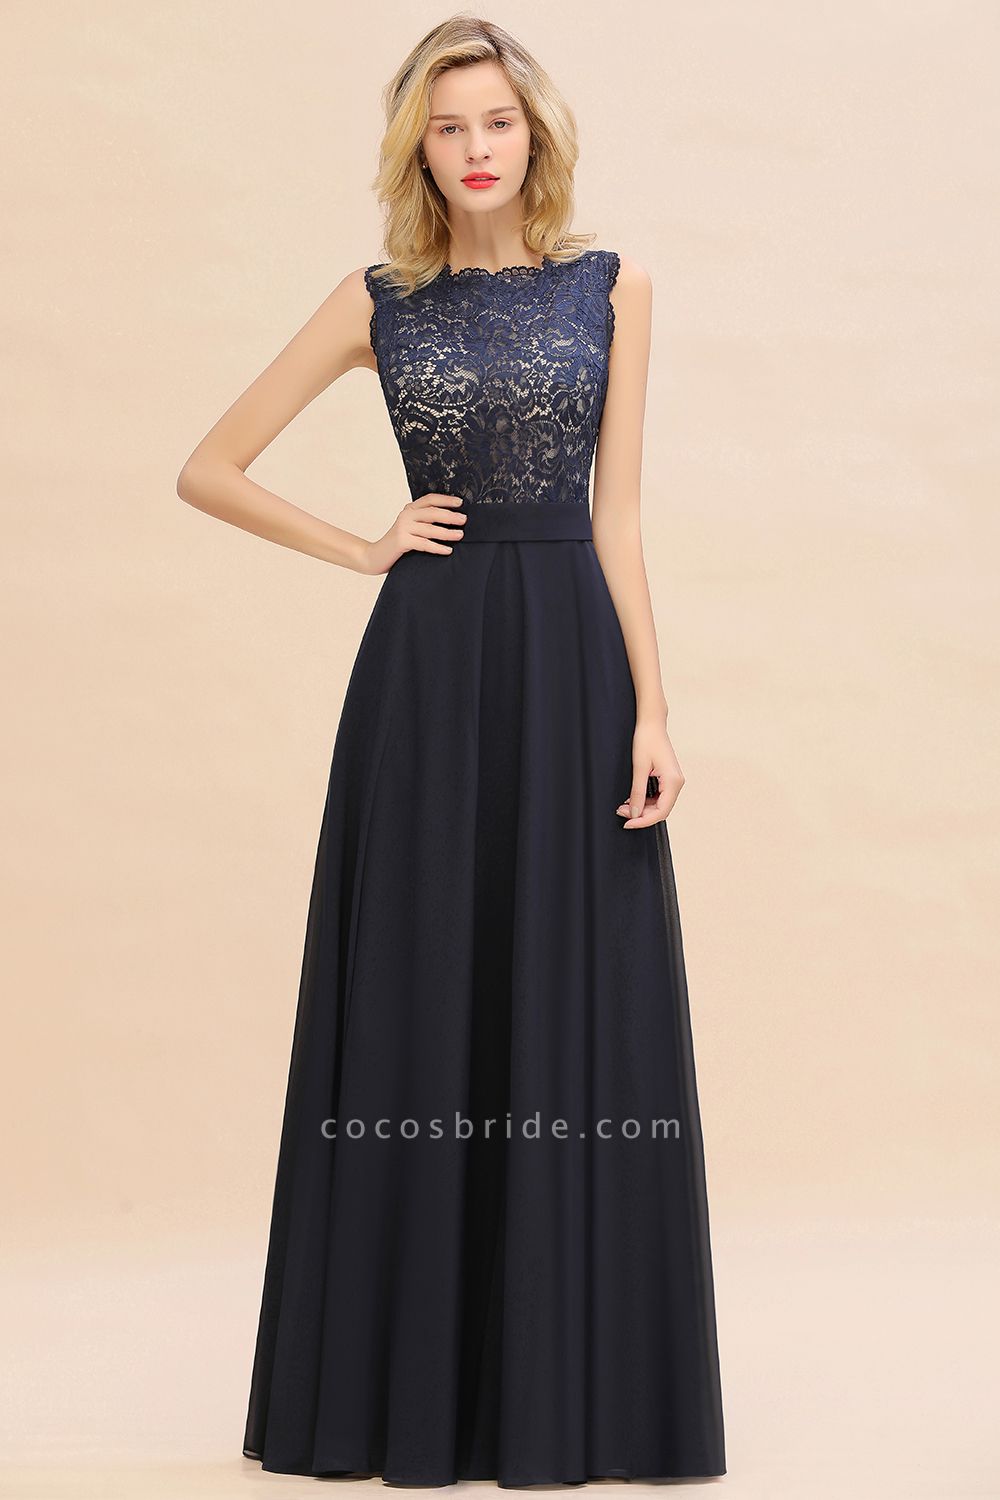 BM0772 Exquisite Scoop Sleeveless A-line Bridesmaid Dress